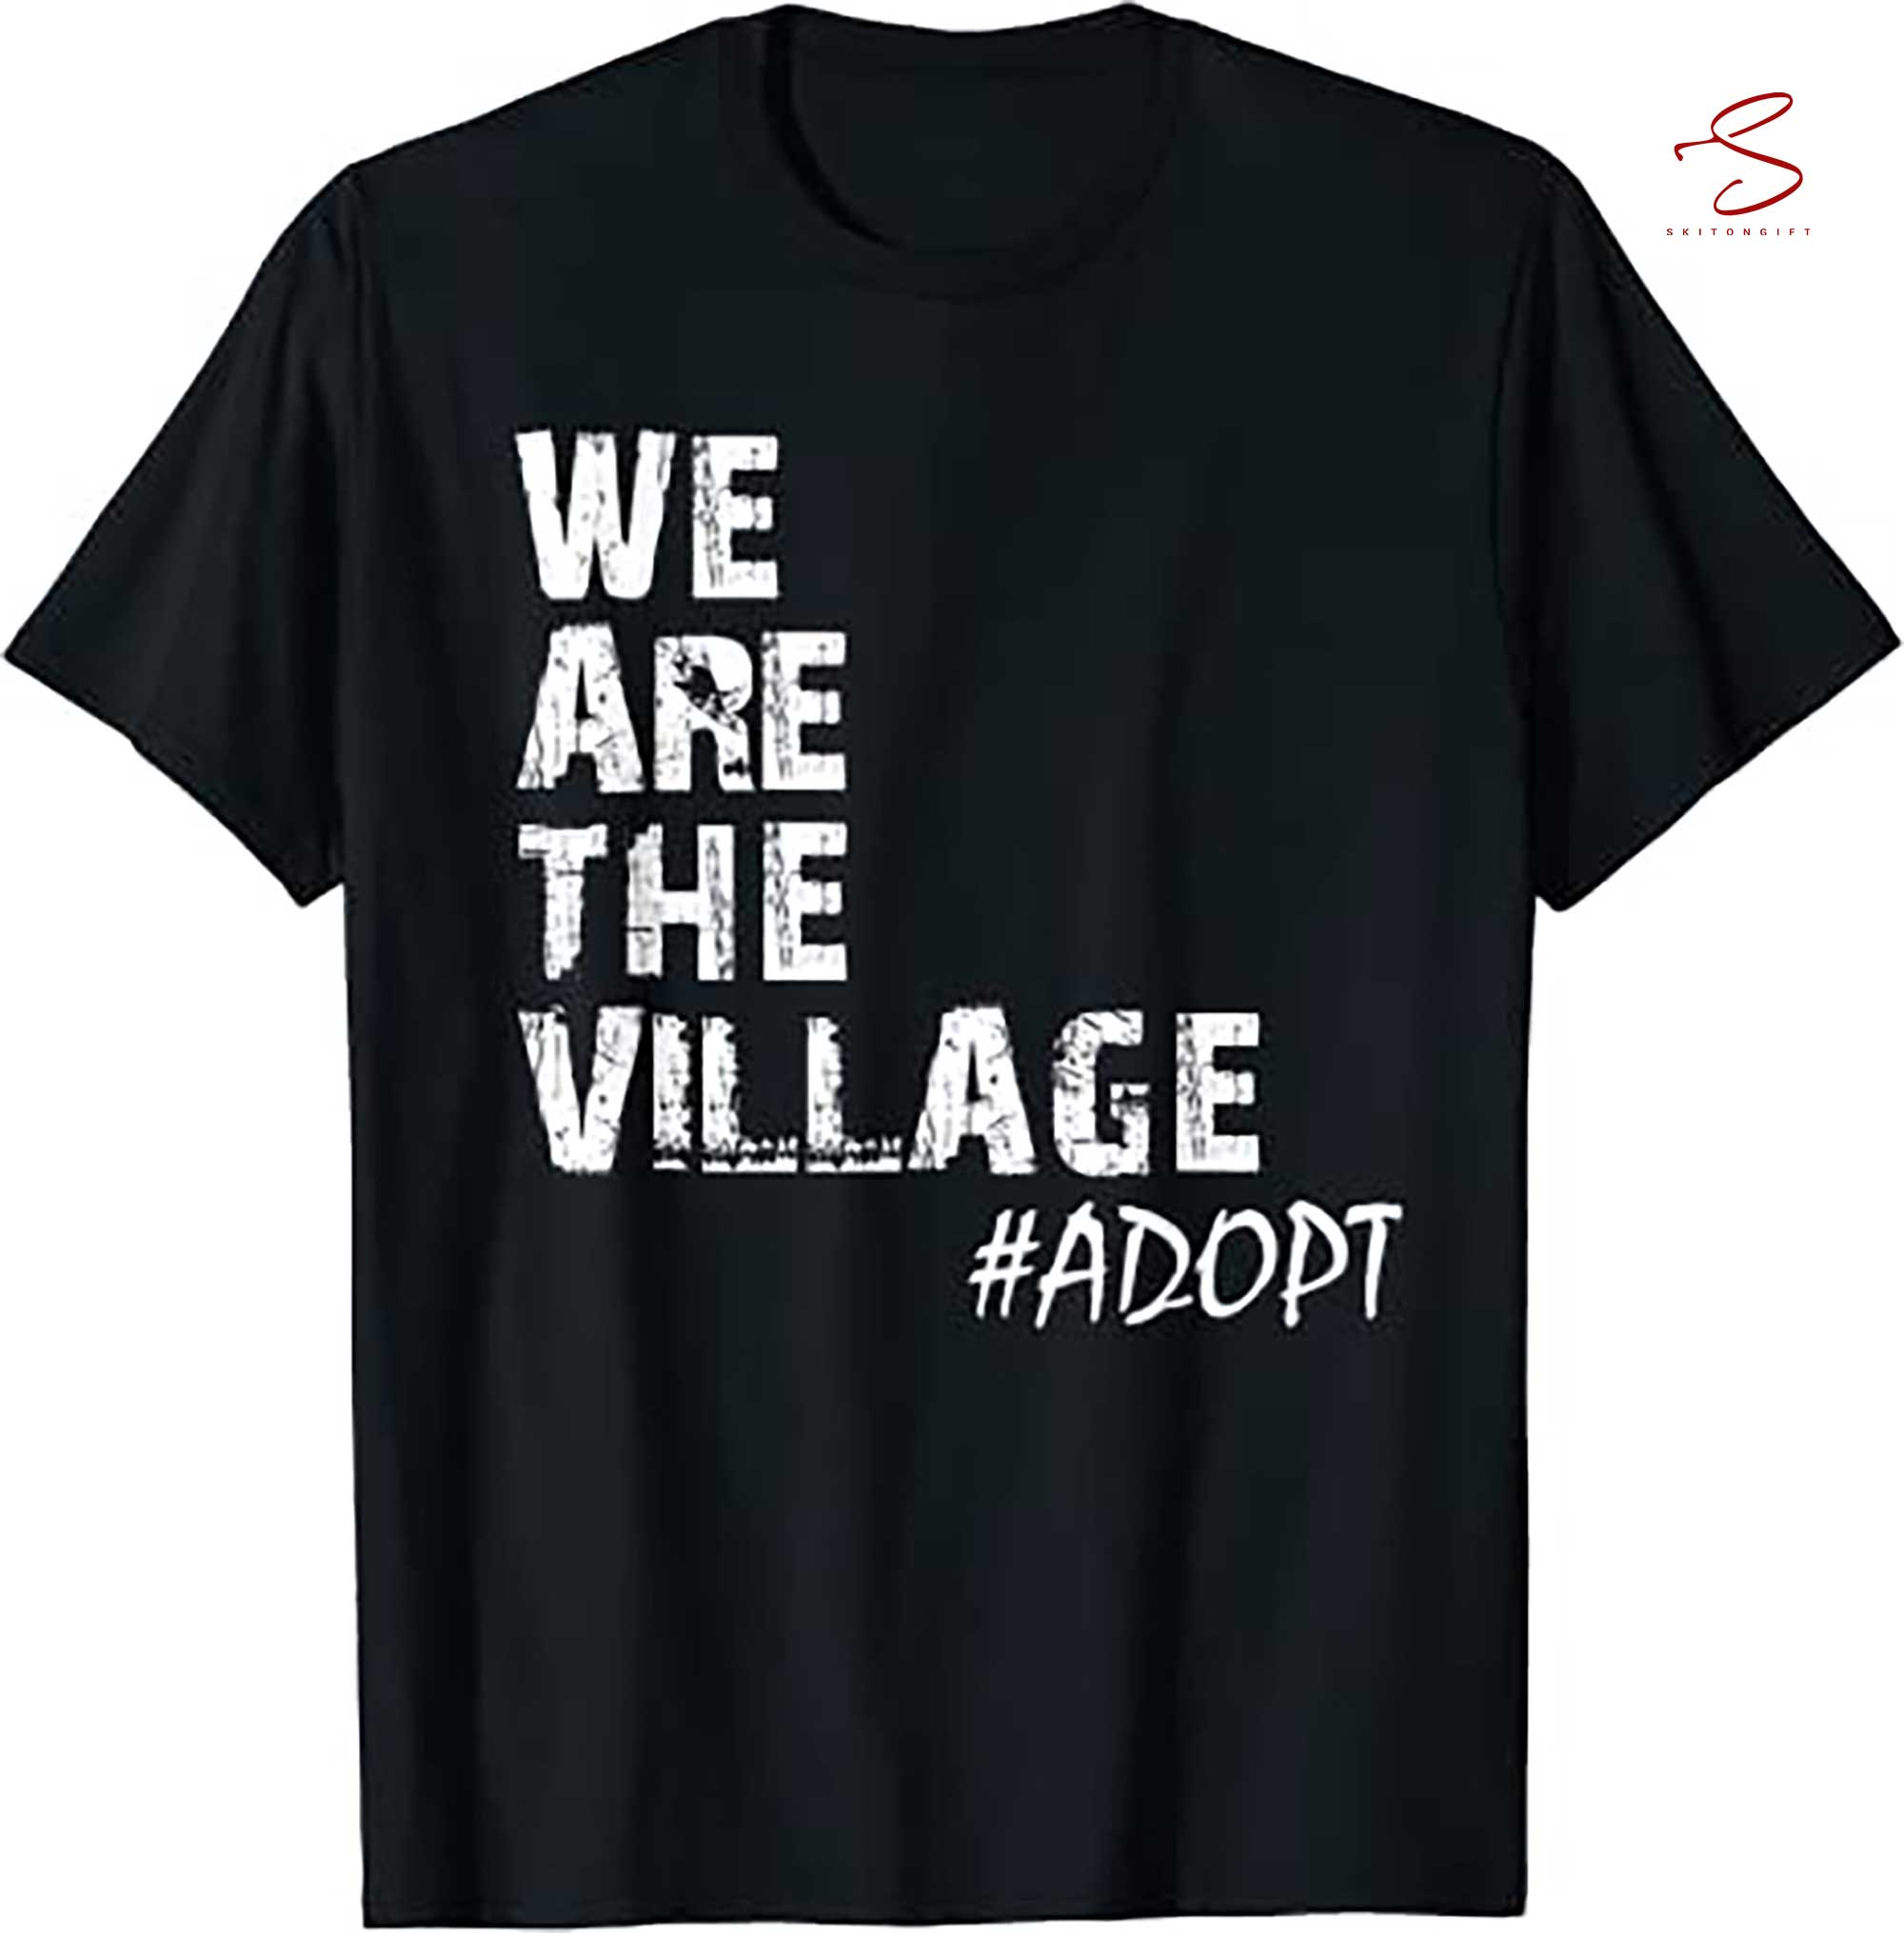 Skitongift We Are The Village Adopt Adoption T Shirt Funny Shirts Long Sleeve Tee Hoody Hoodie Heavyweight Pullover Hoodies Sweater